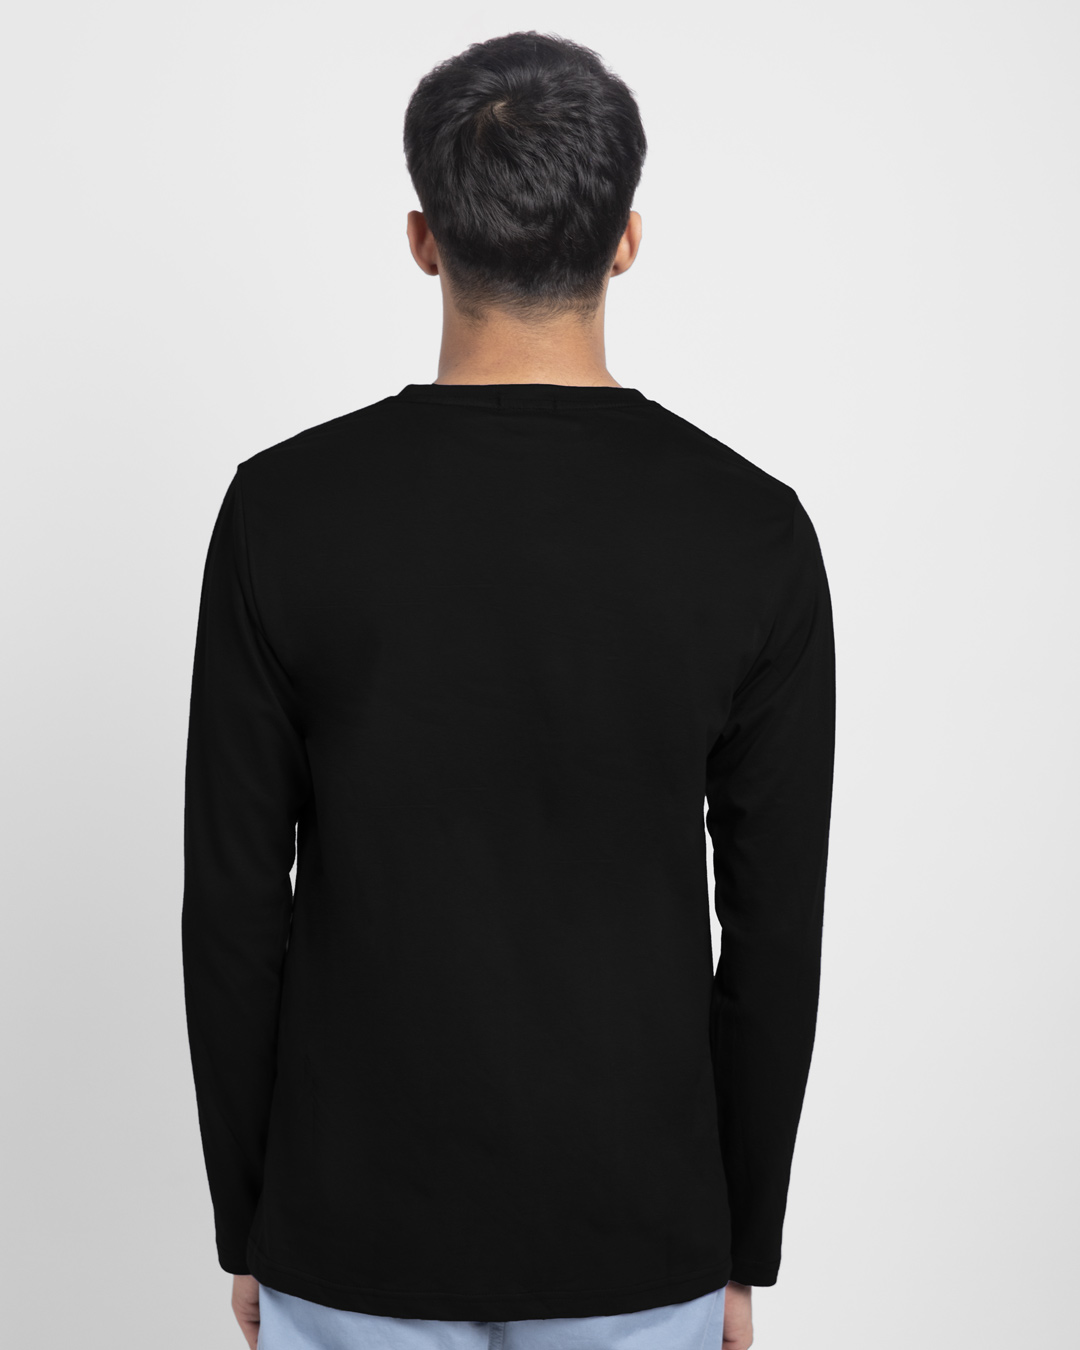 Shop An Imposter full Sleeve T-Shirt Black-Back